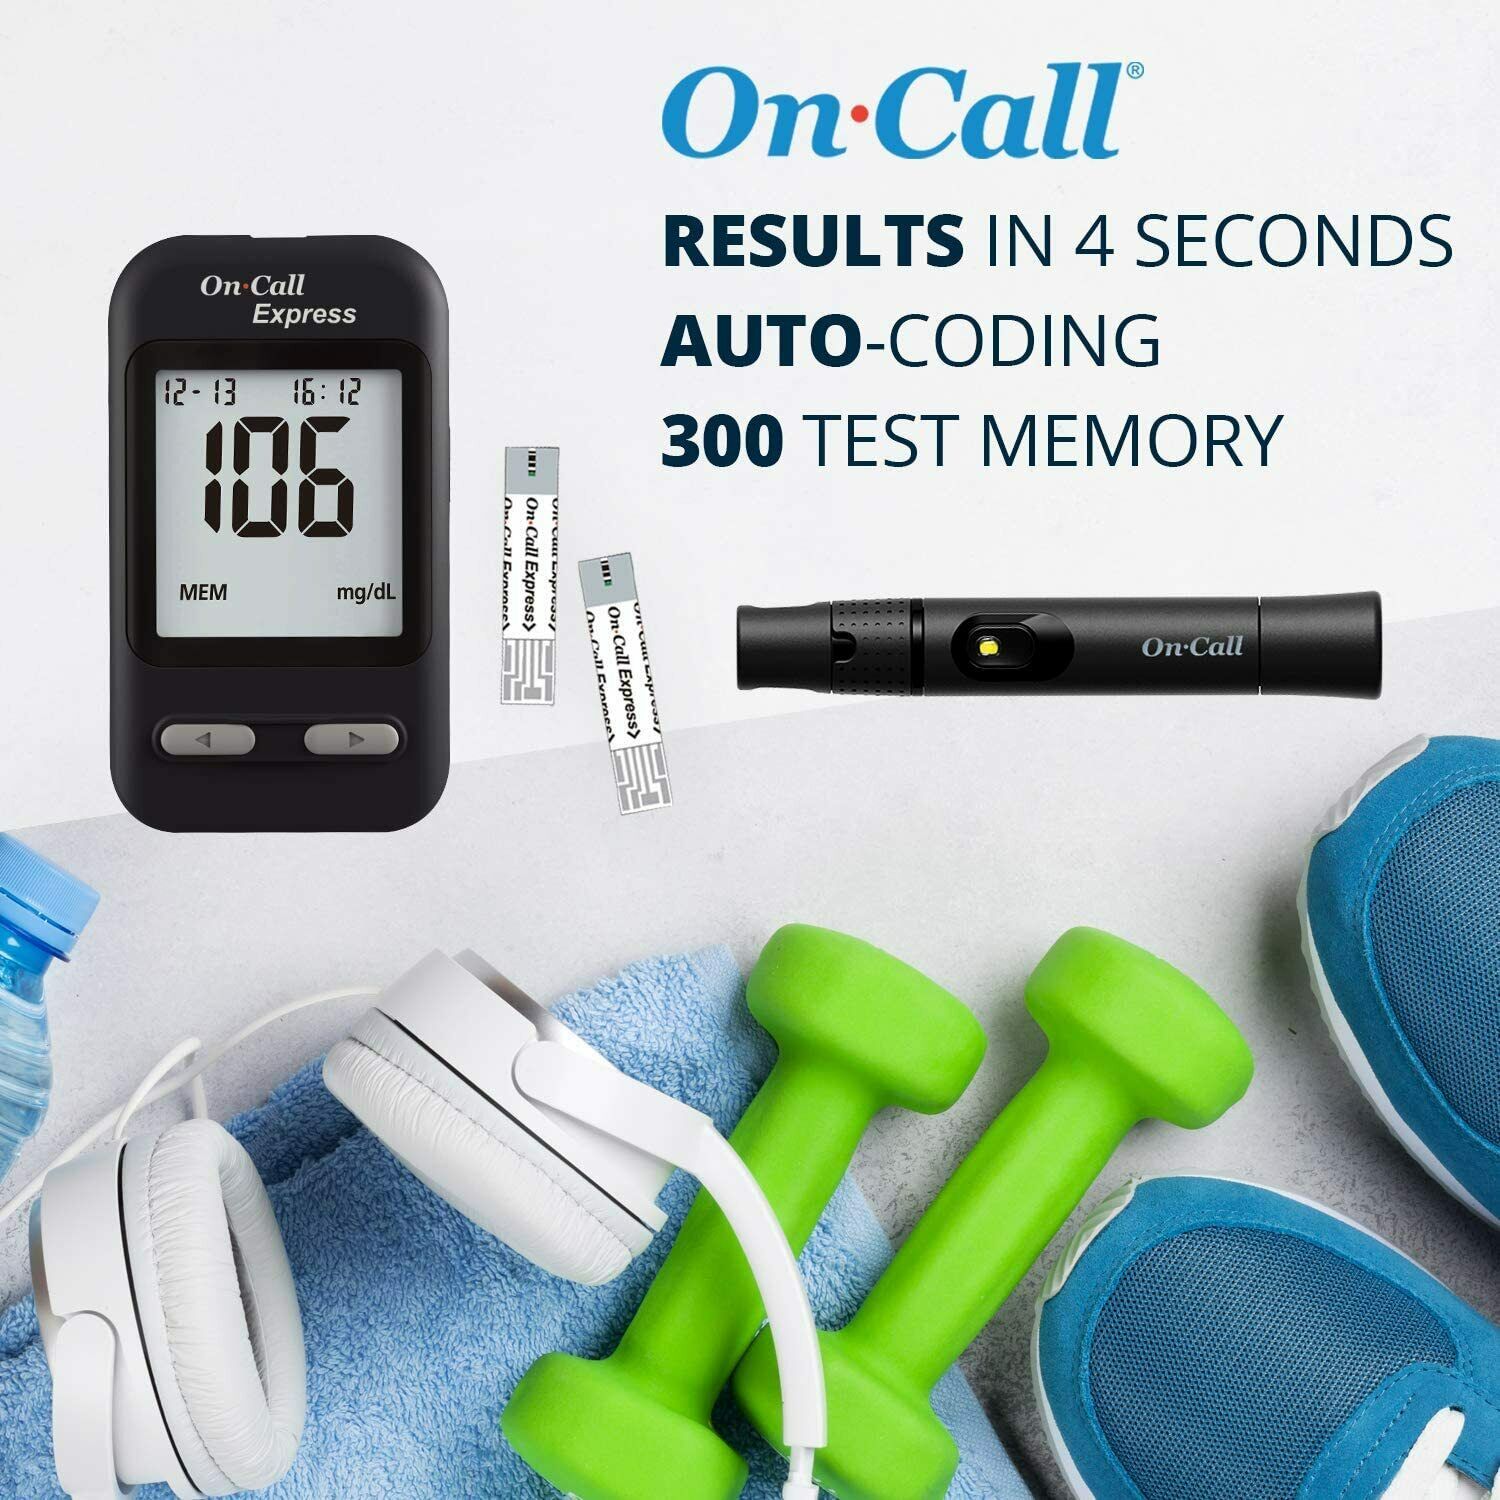 On Call Express Diabetes Testing Kit